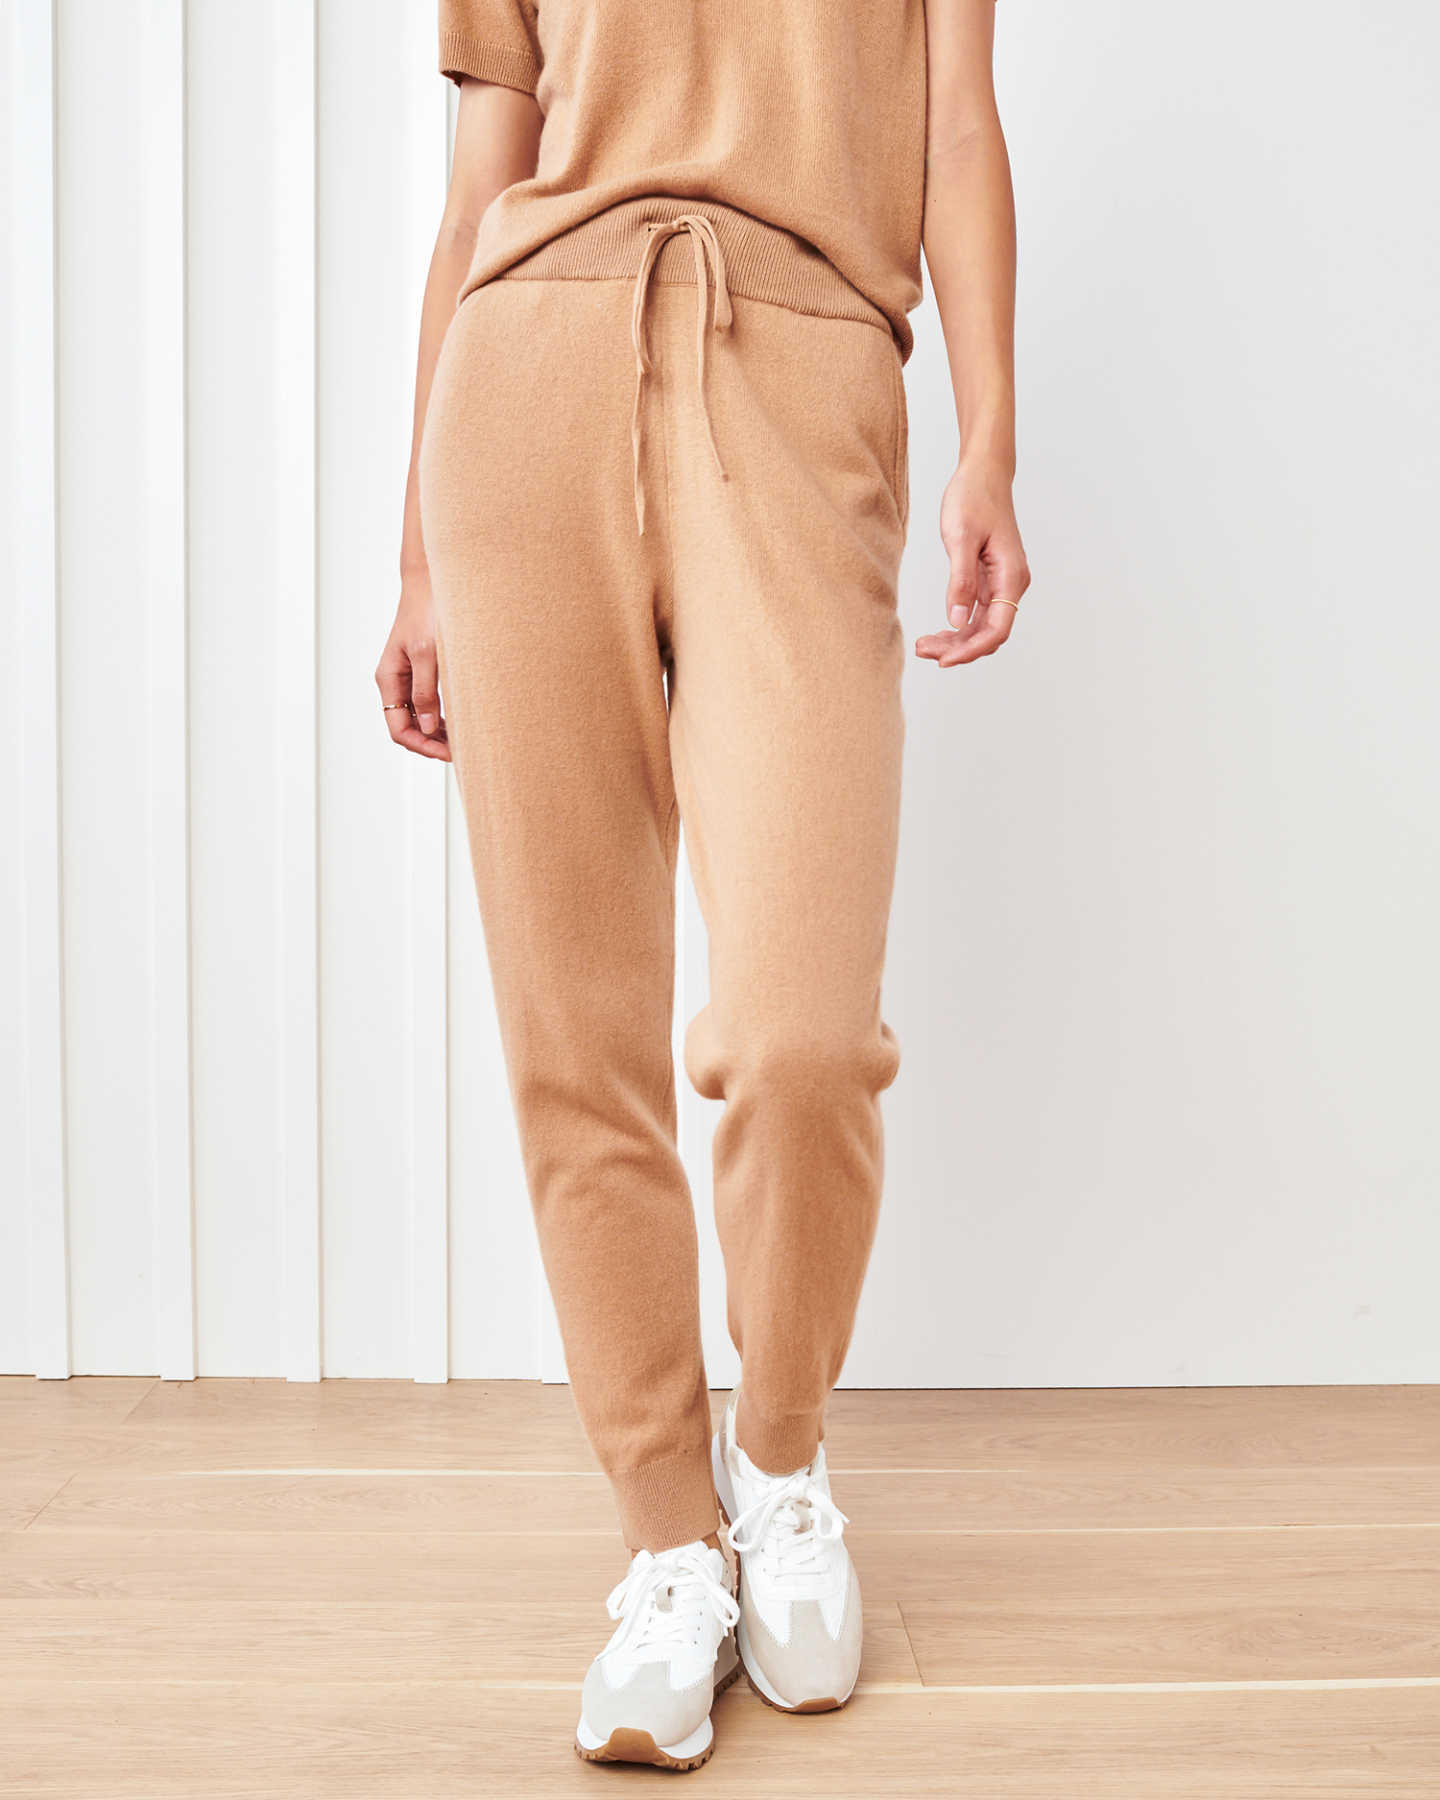 Women's Cashmere Sweatpants - Our collection